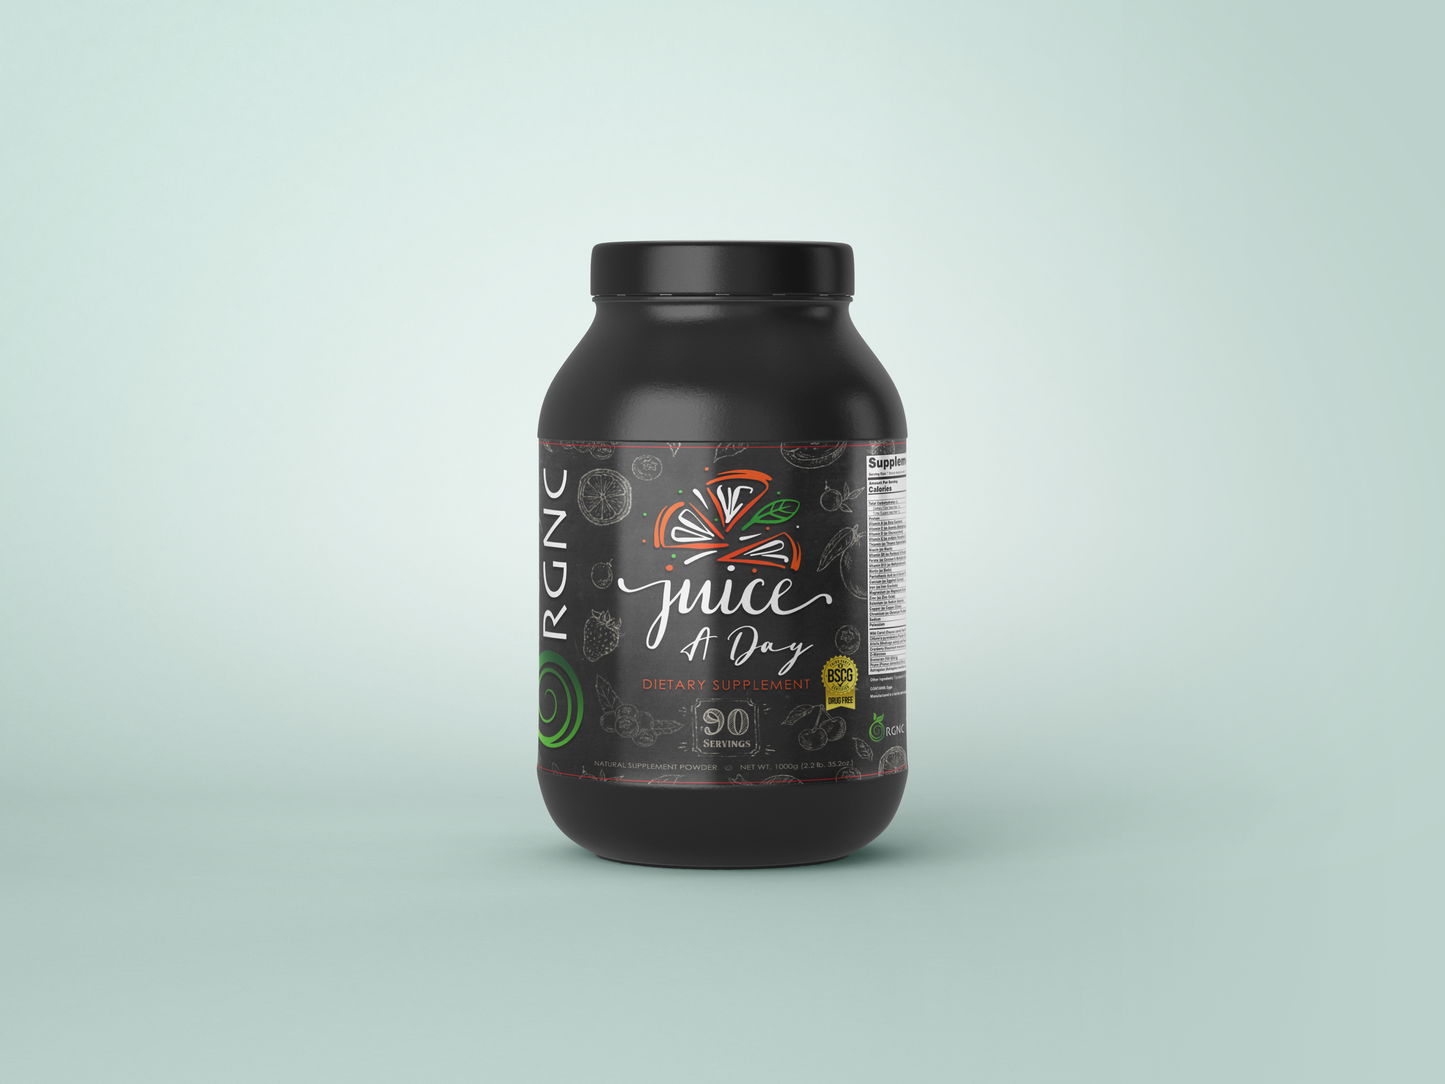 Juice-A-Day Original Vitality Blend